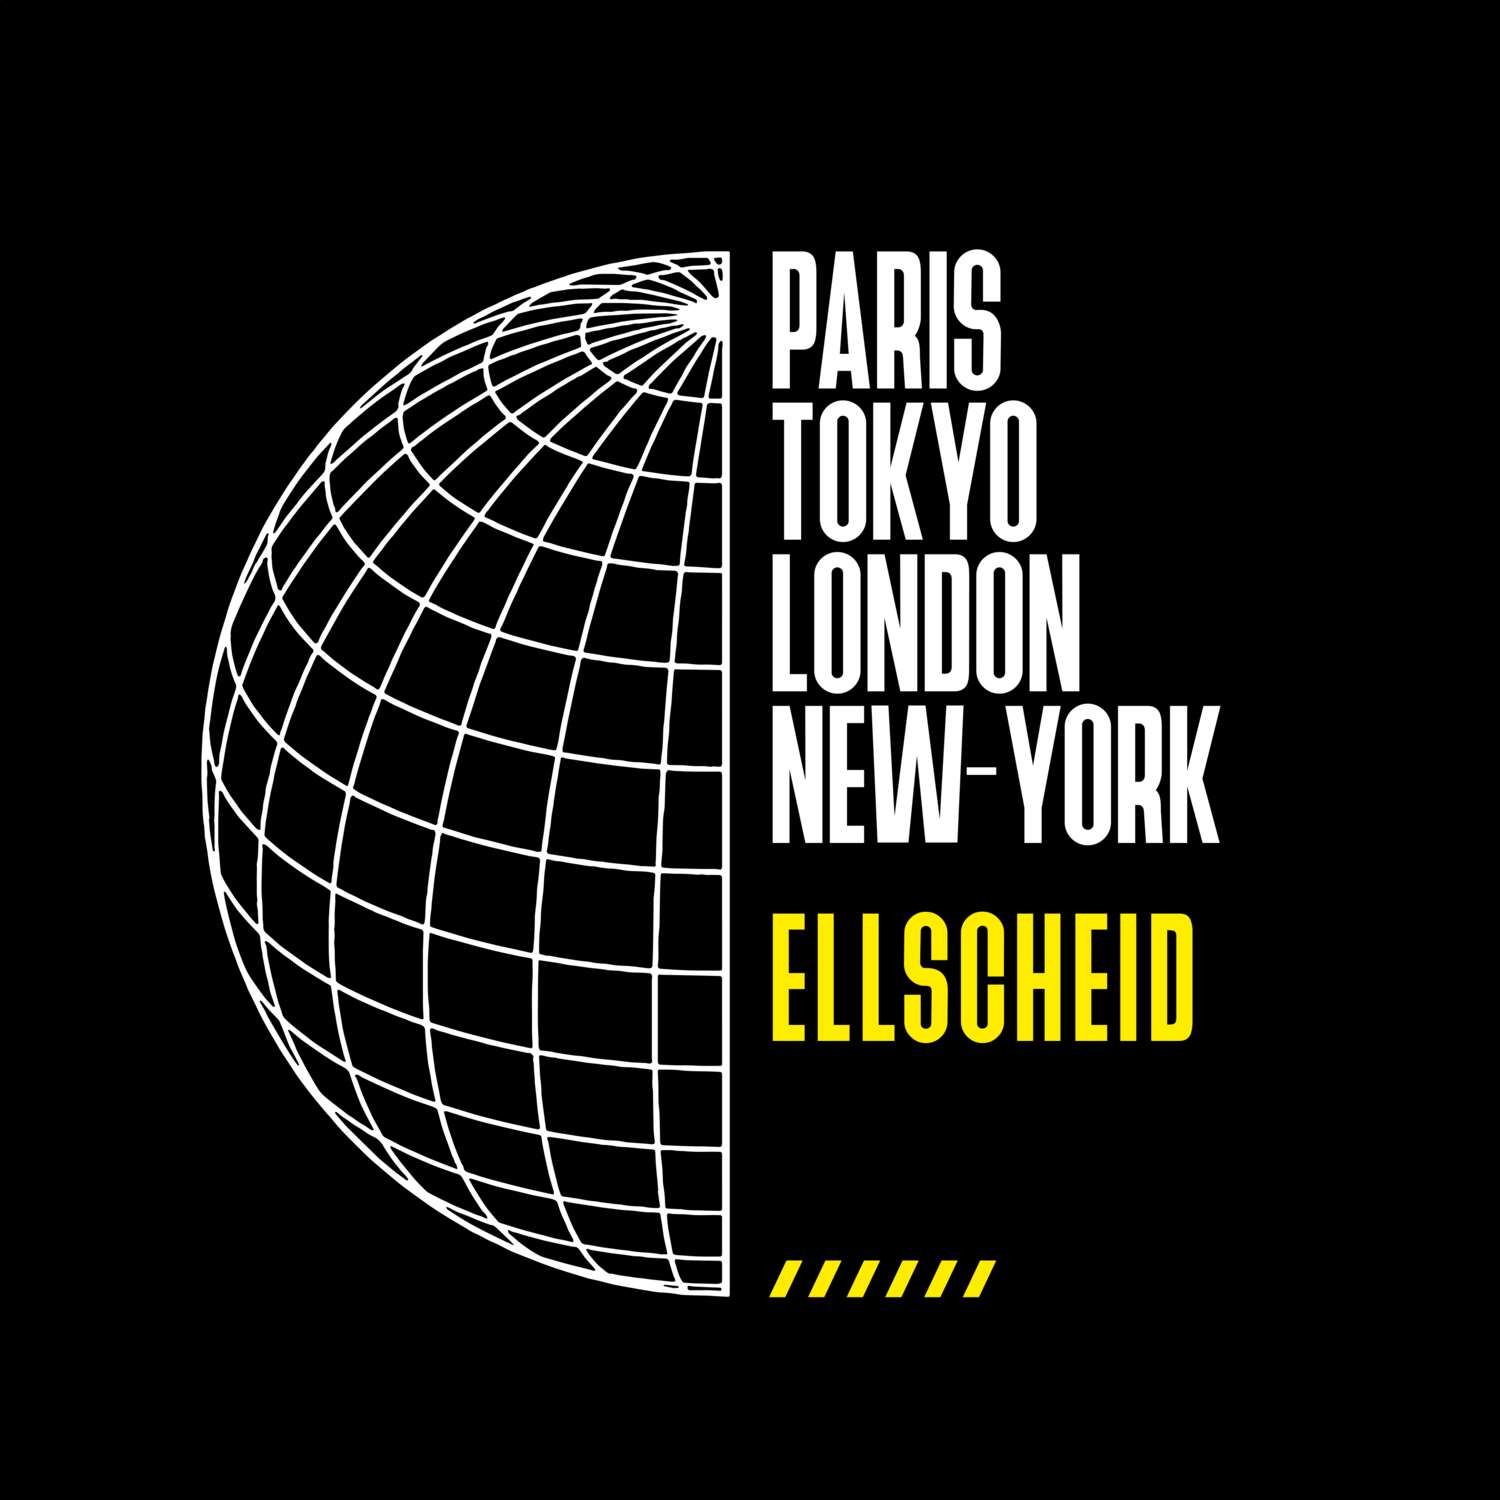 Ellscheid T-Shirt »Paris Tokyo London«